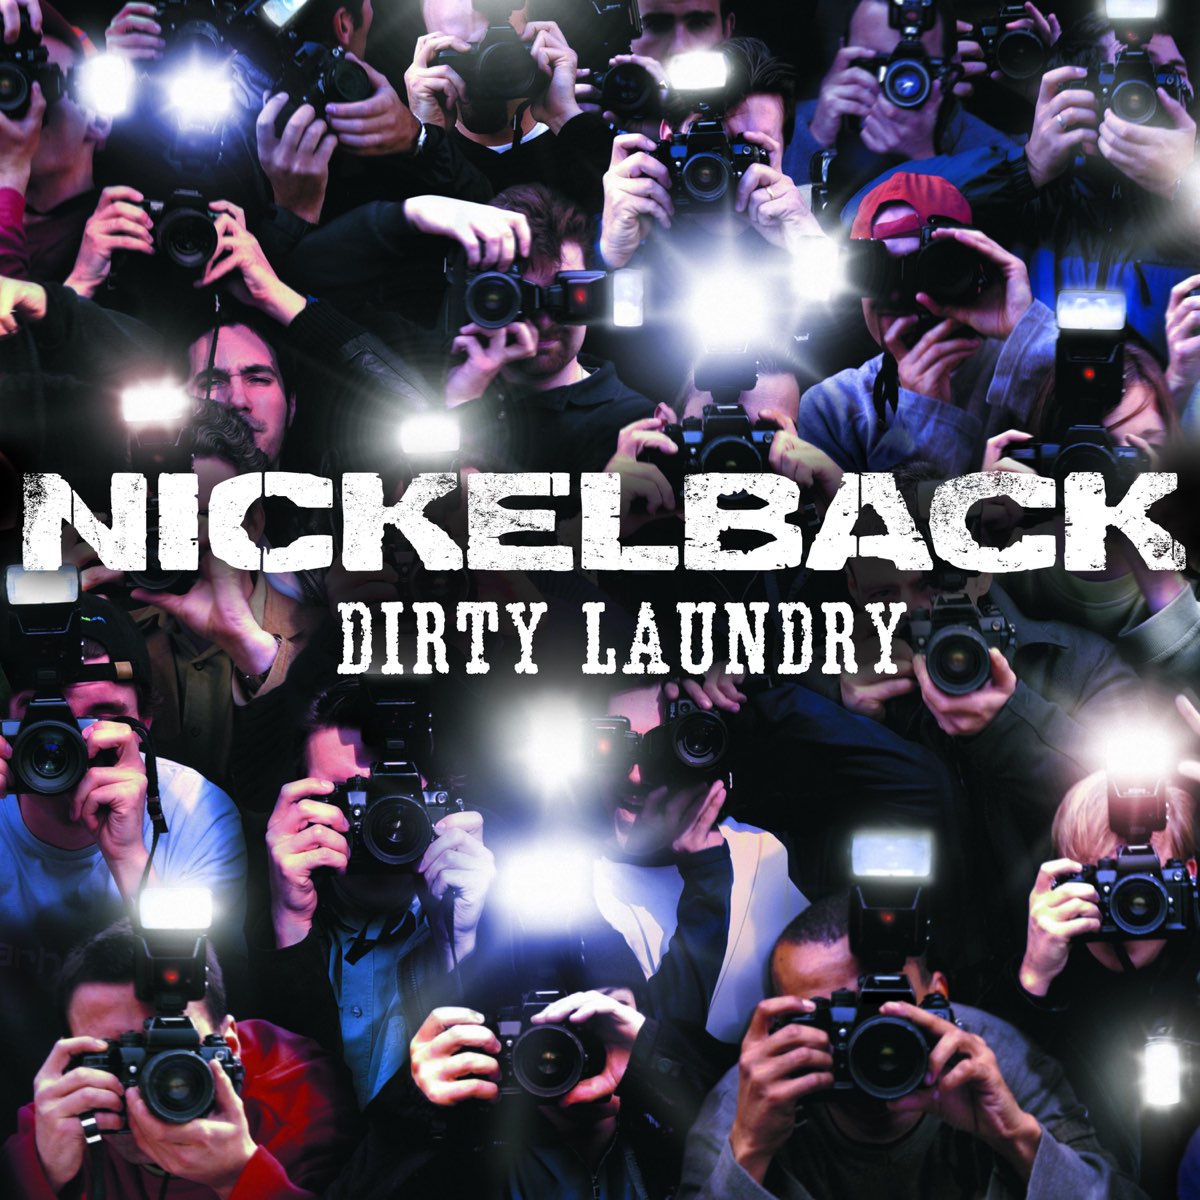 Nickelback альбомы. Nickelback Dirty Laundry. Nickelback обложки альбомов. Nickelback Dirty Laundry (2016) картинки. Nickelback новый альбом.